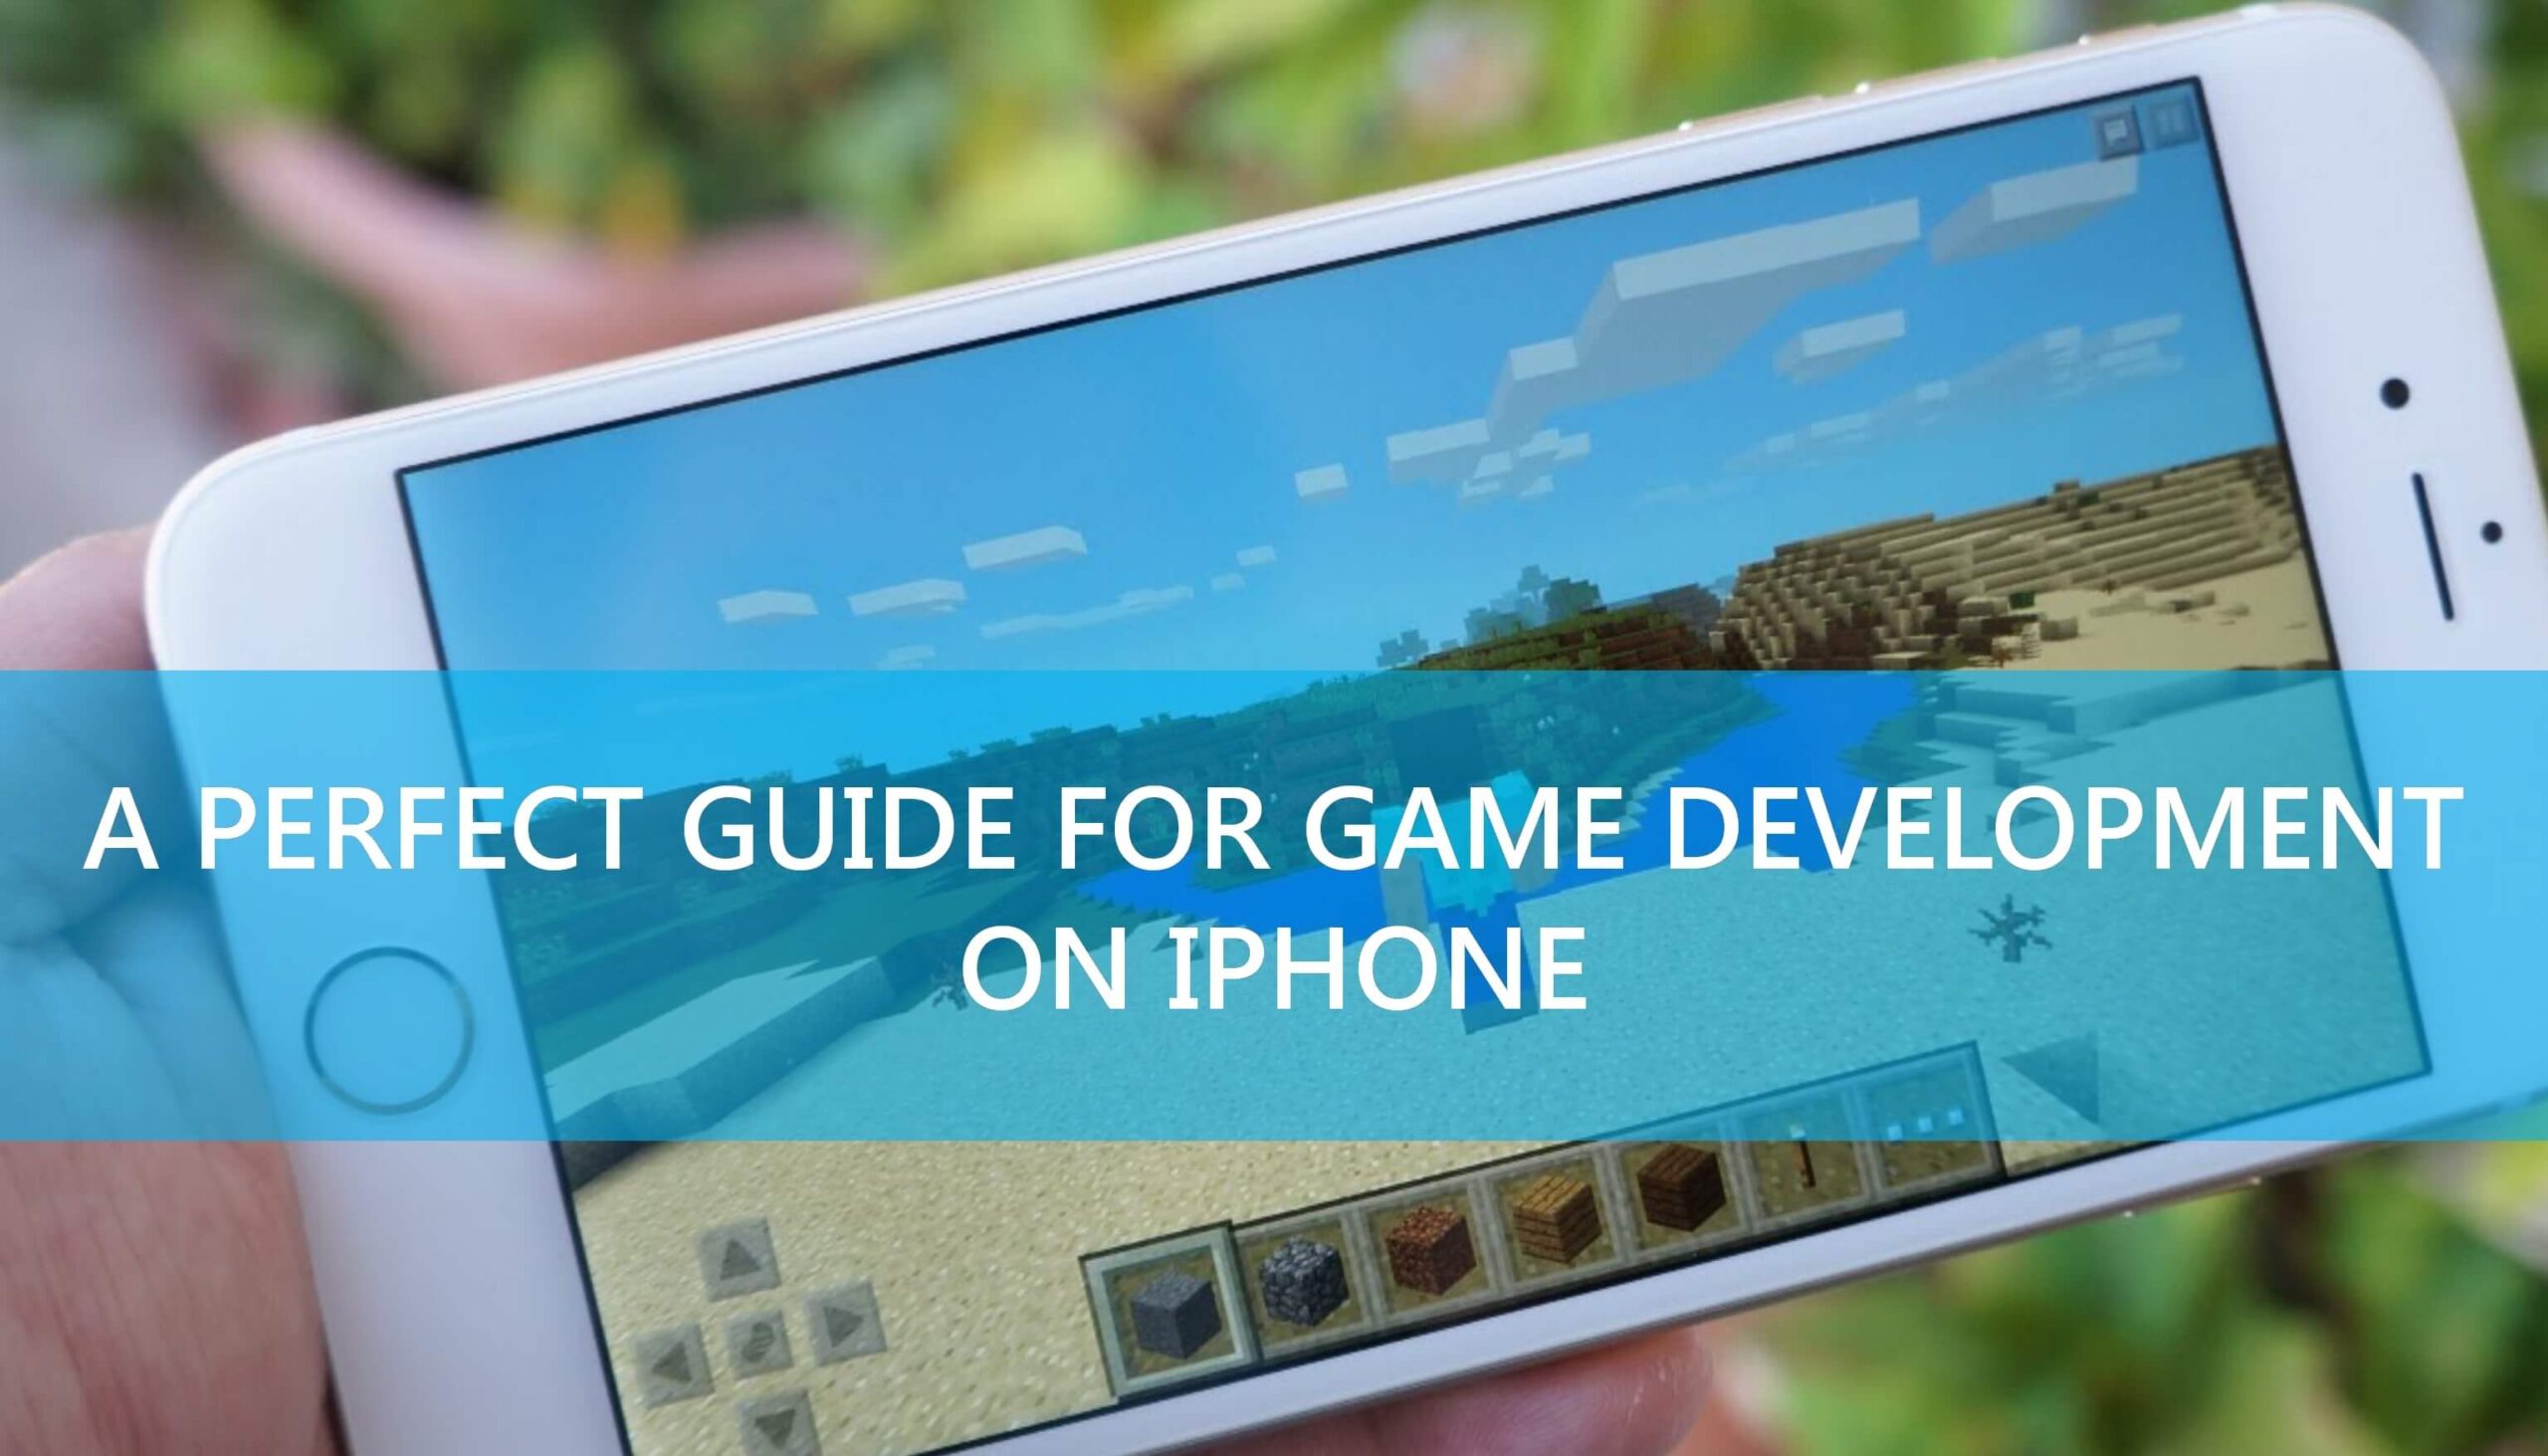 Tips for mobile game development